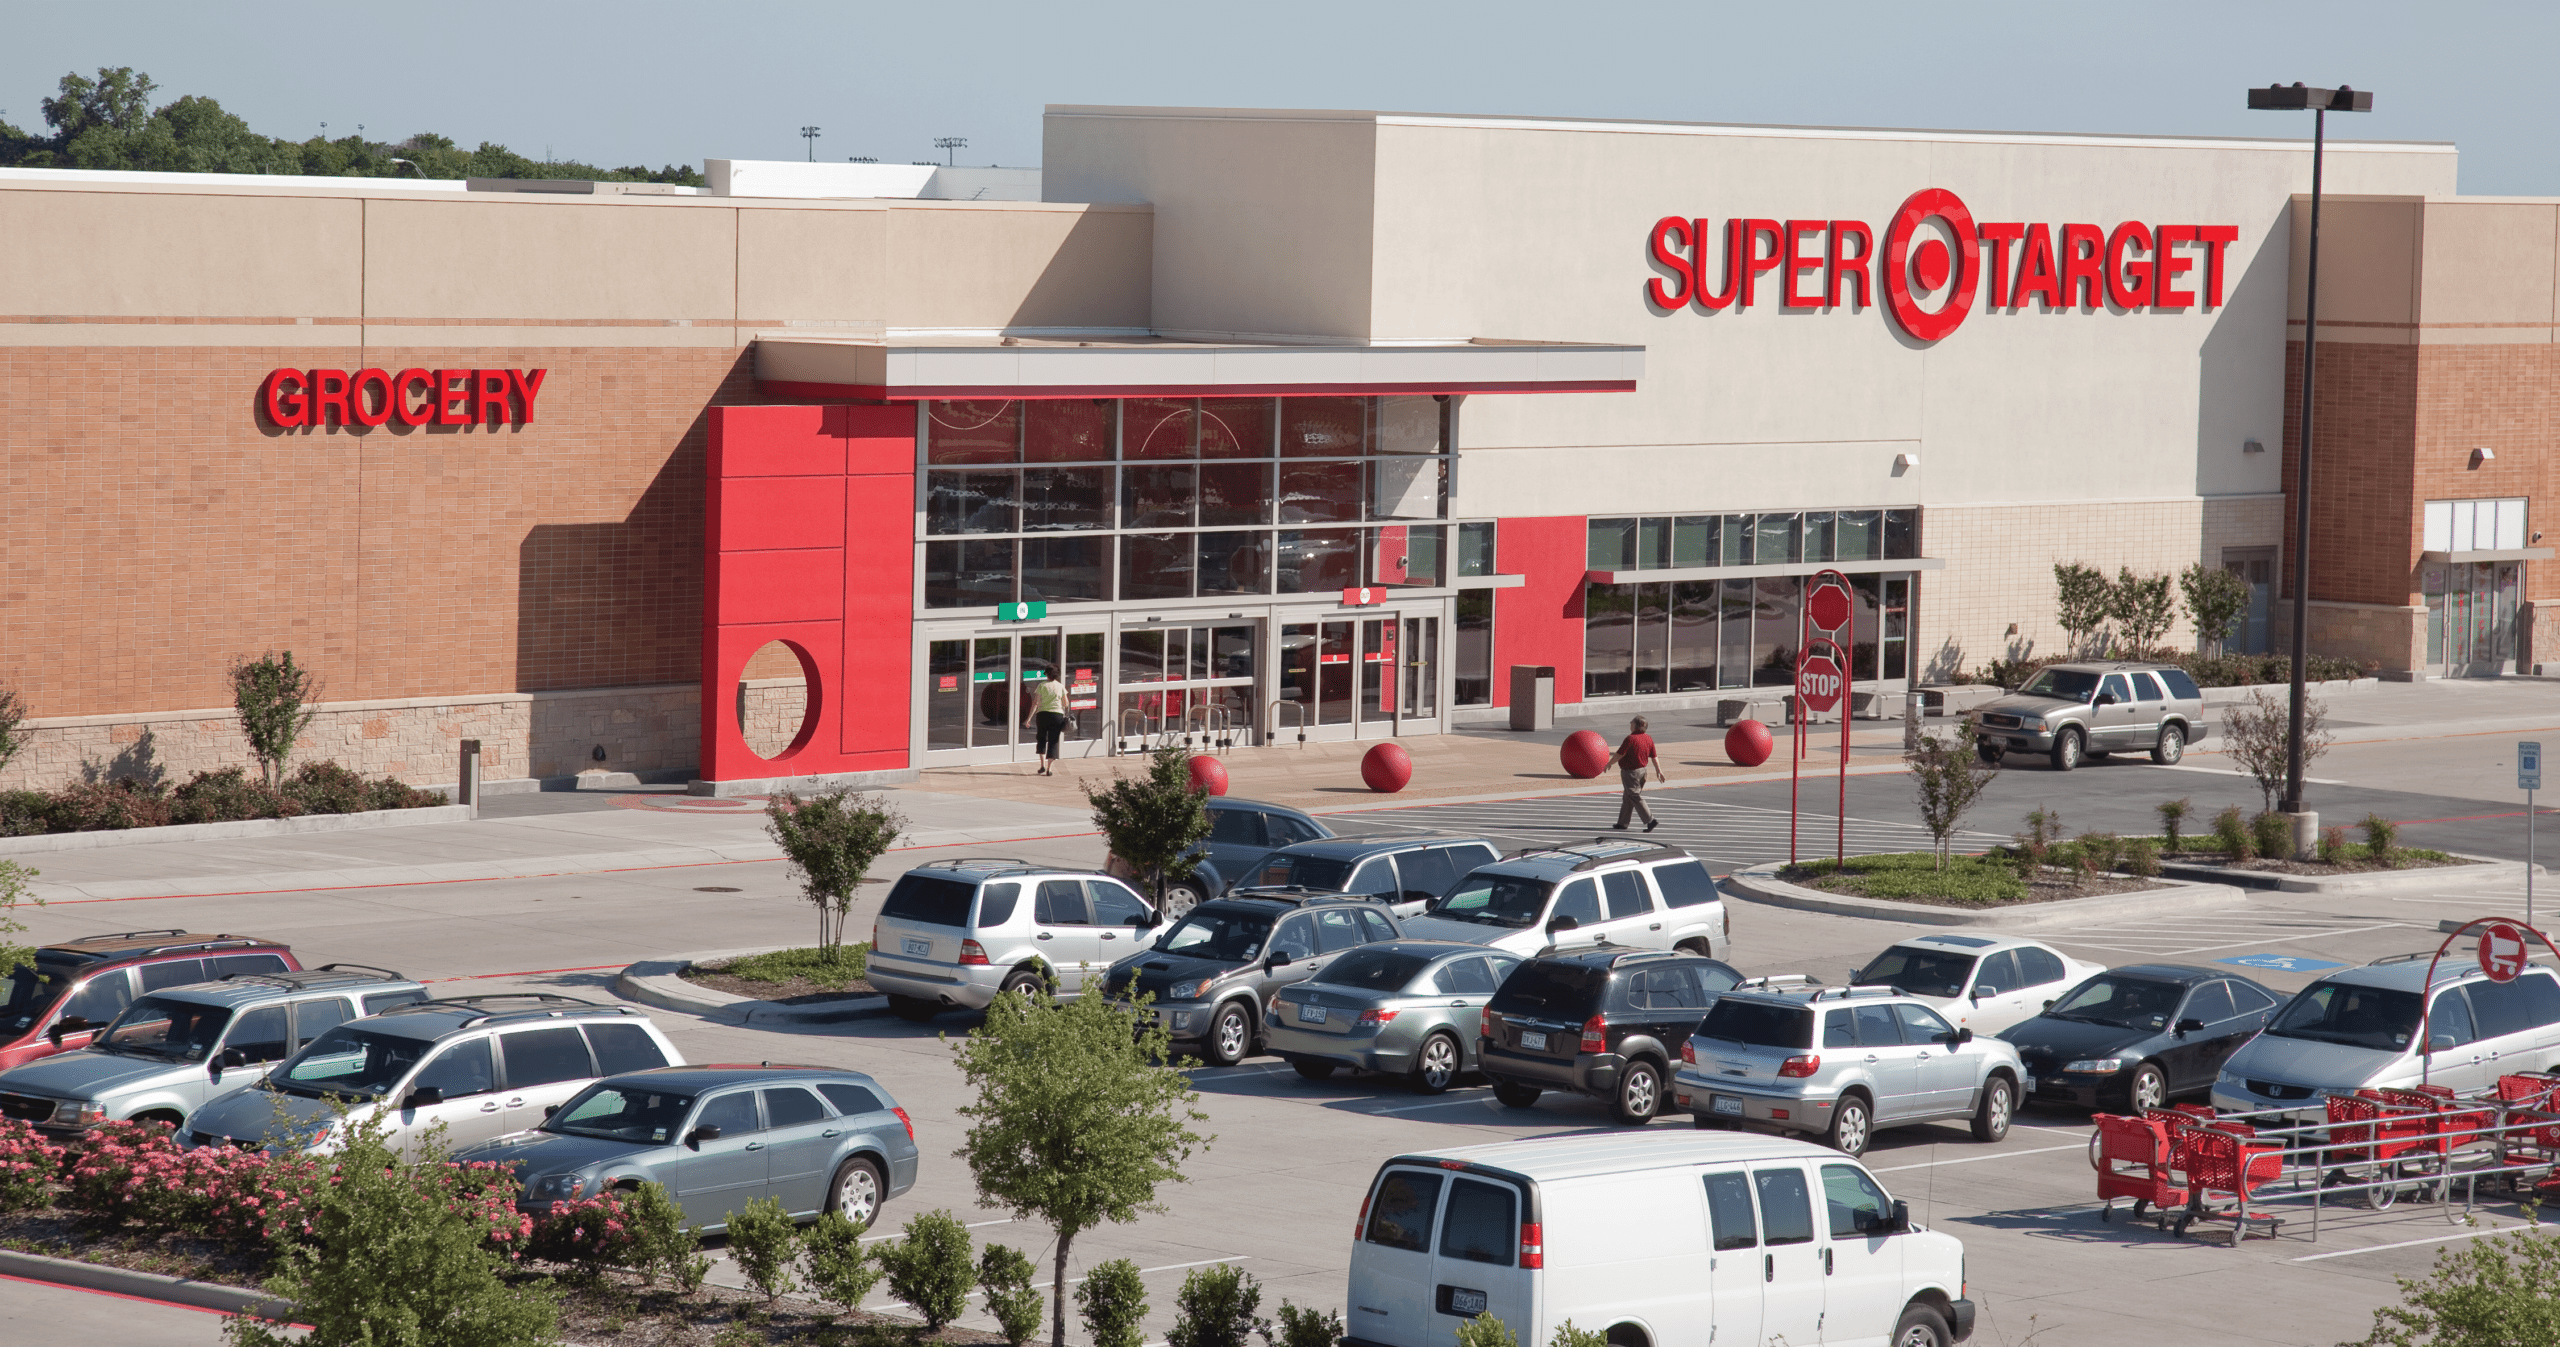 Super Target building and parking lot